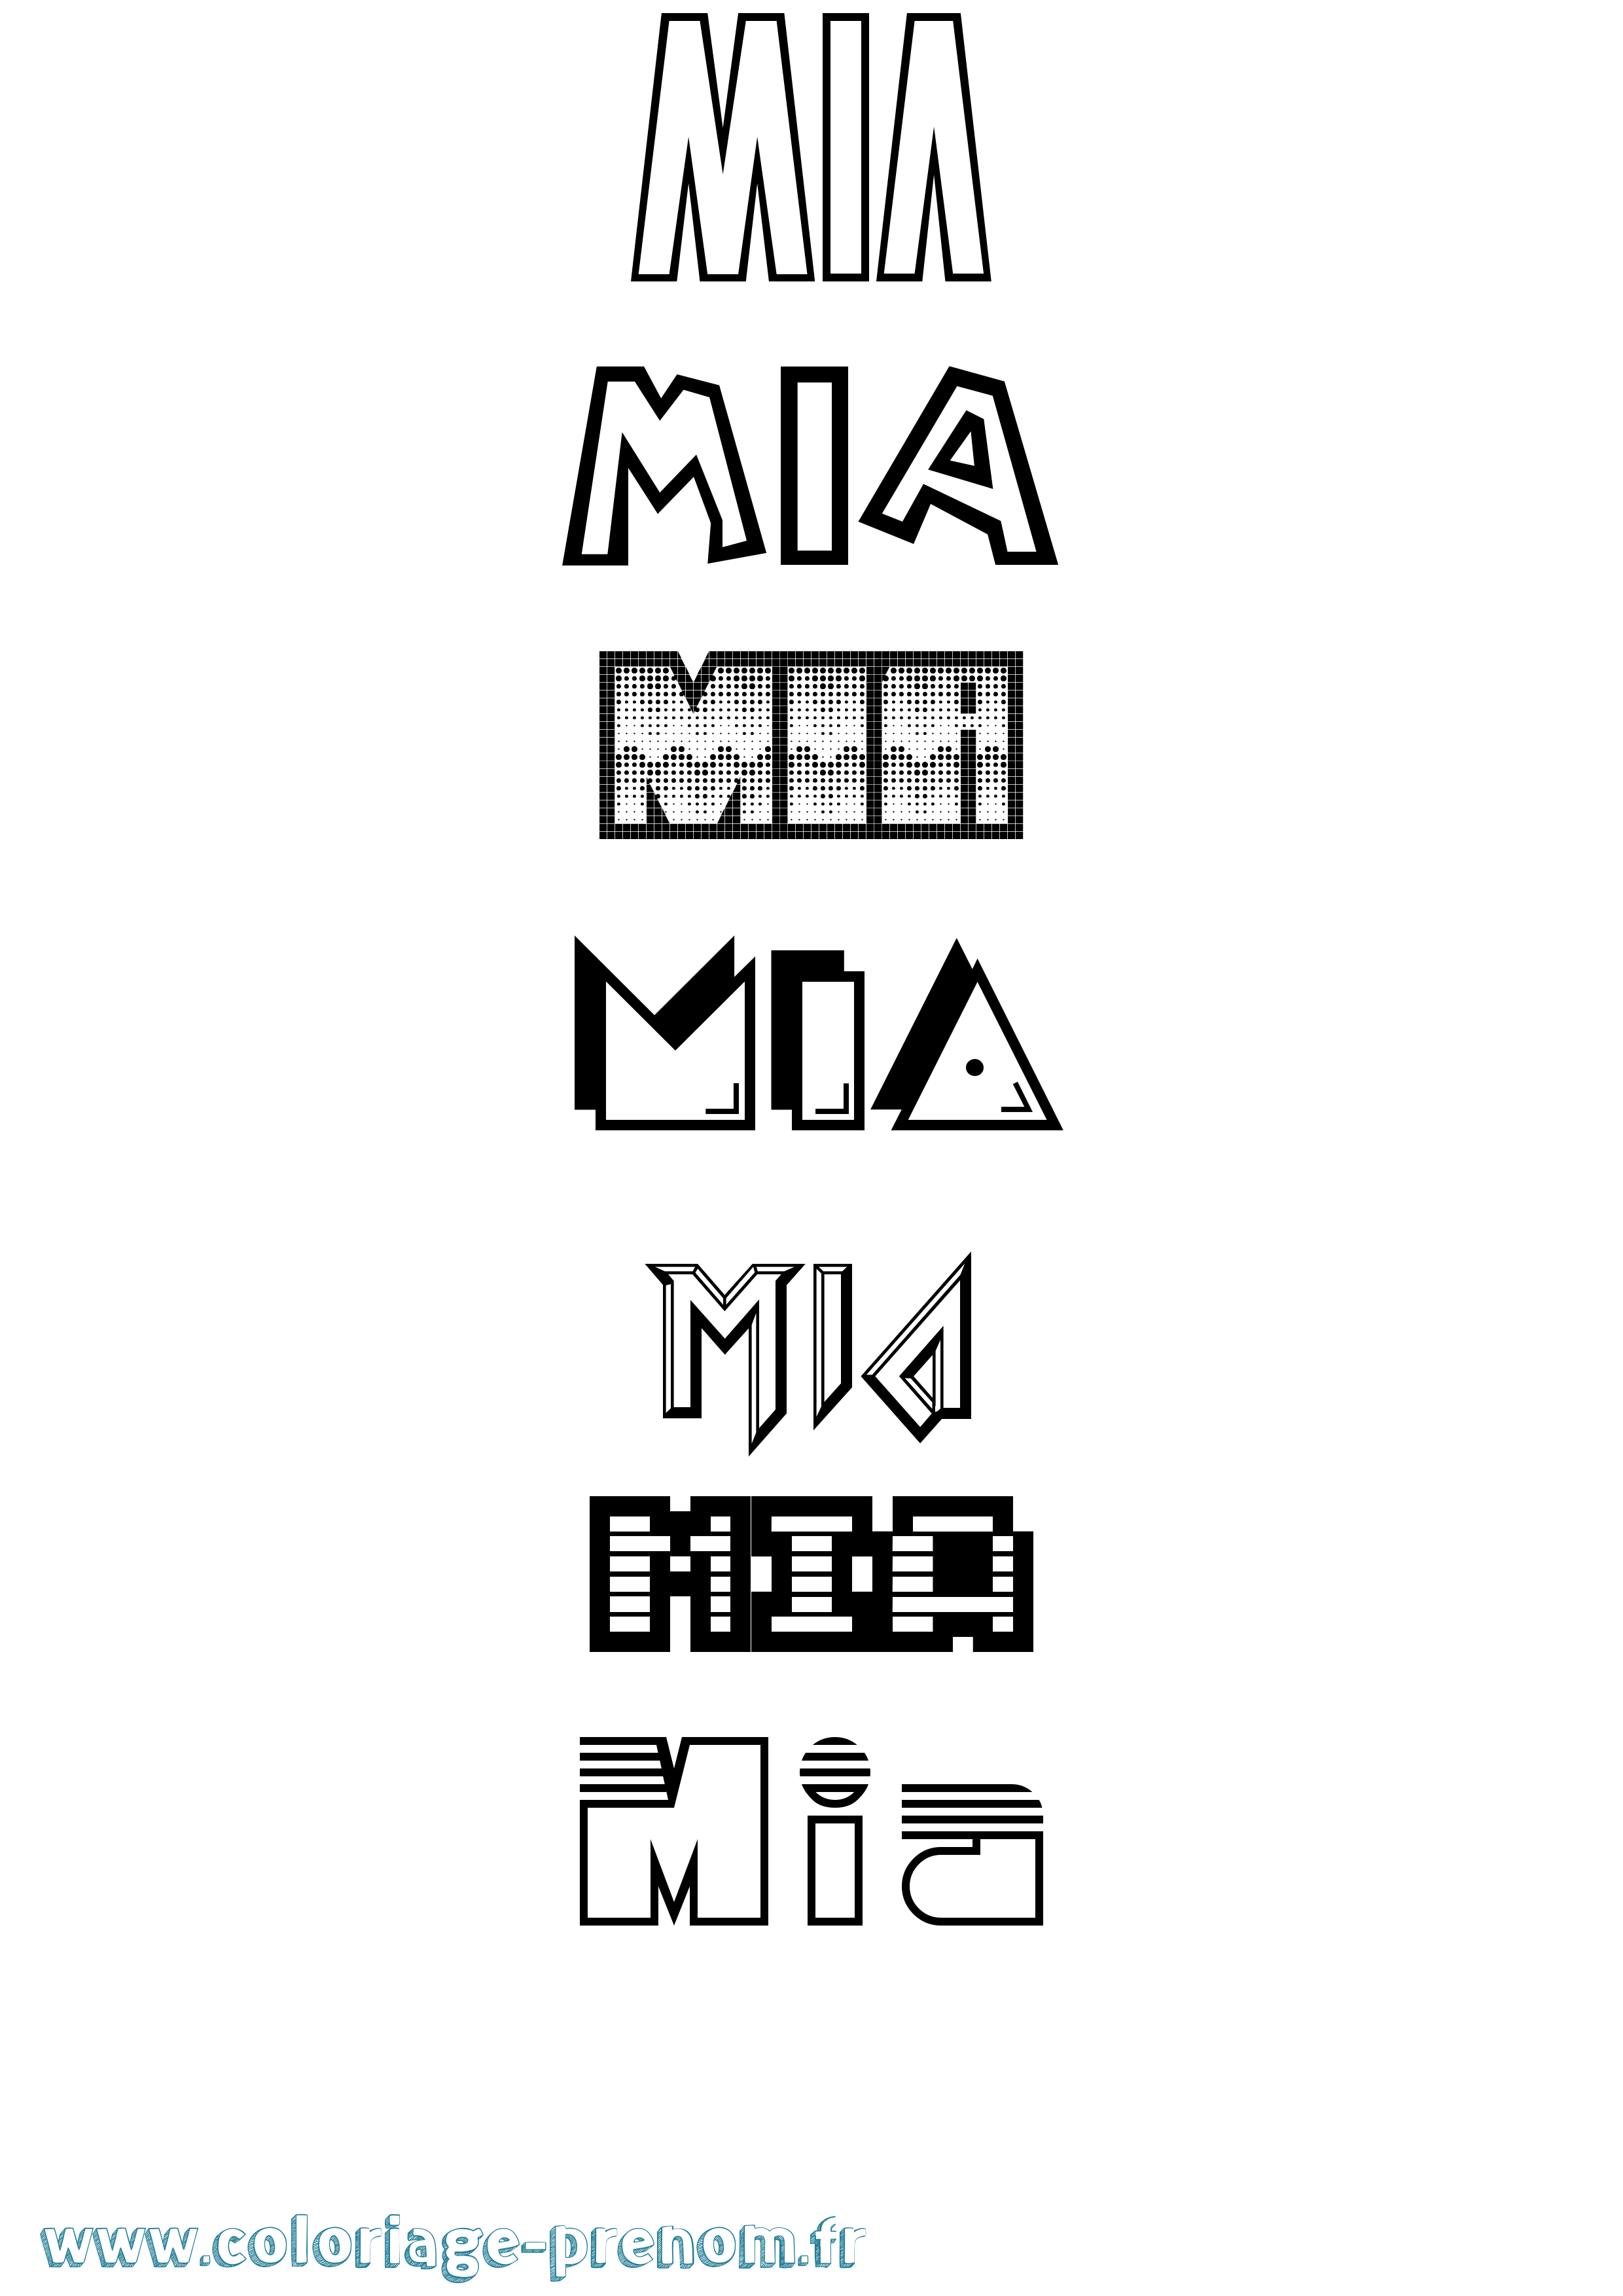 Coloriage prénom Mia